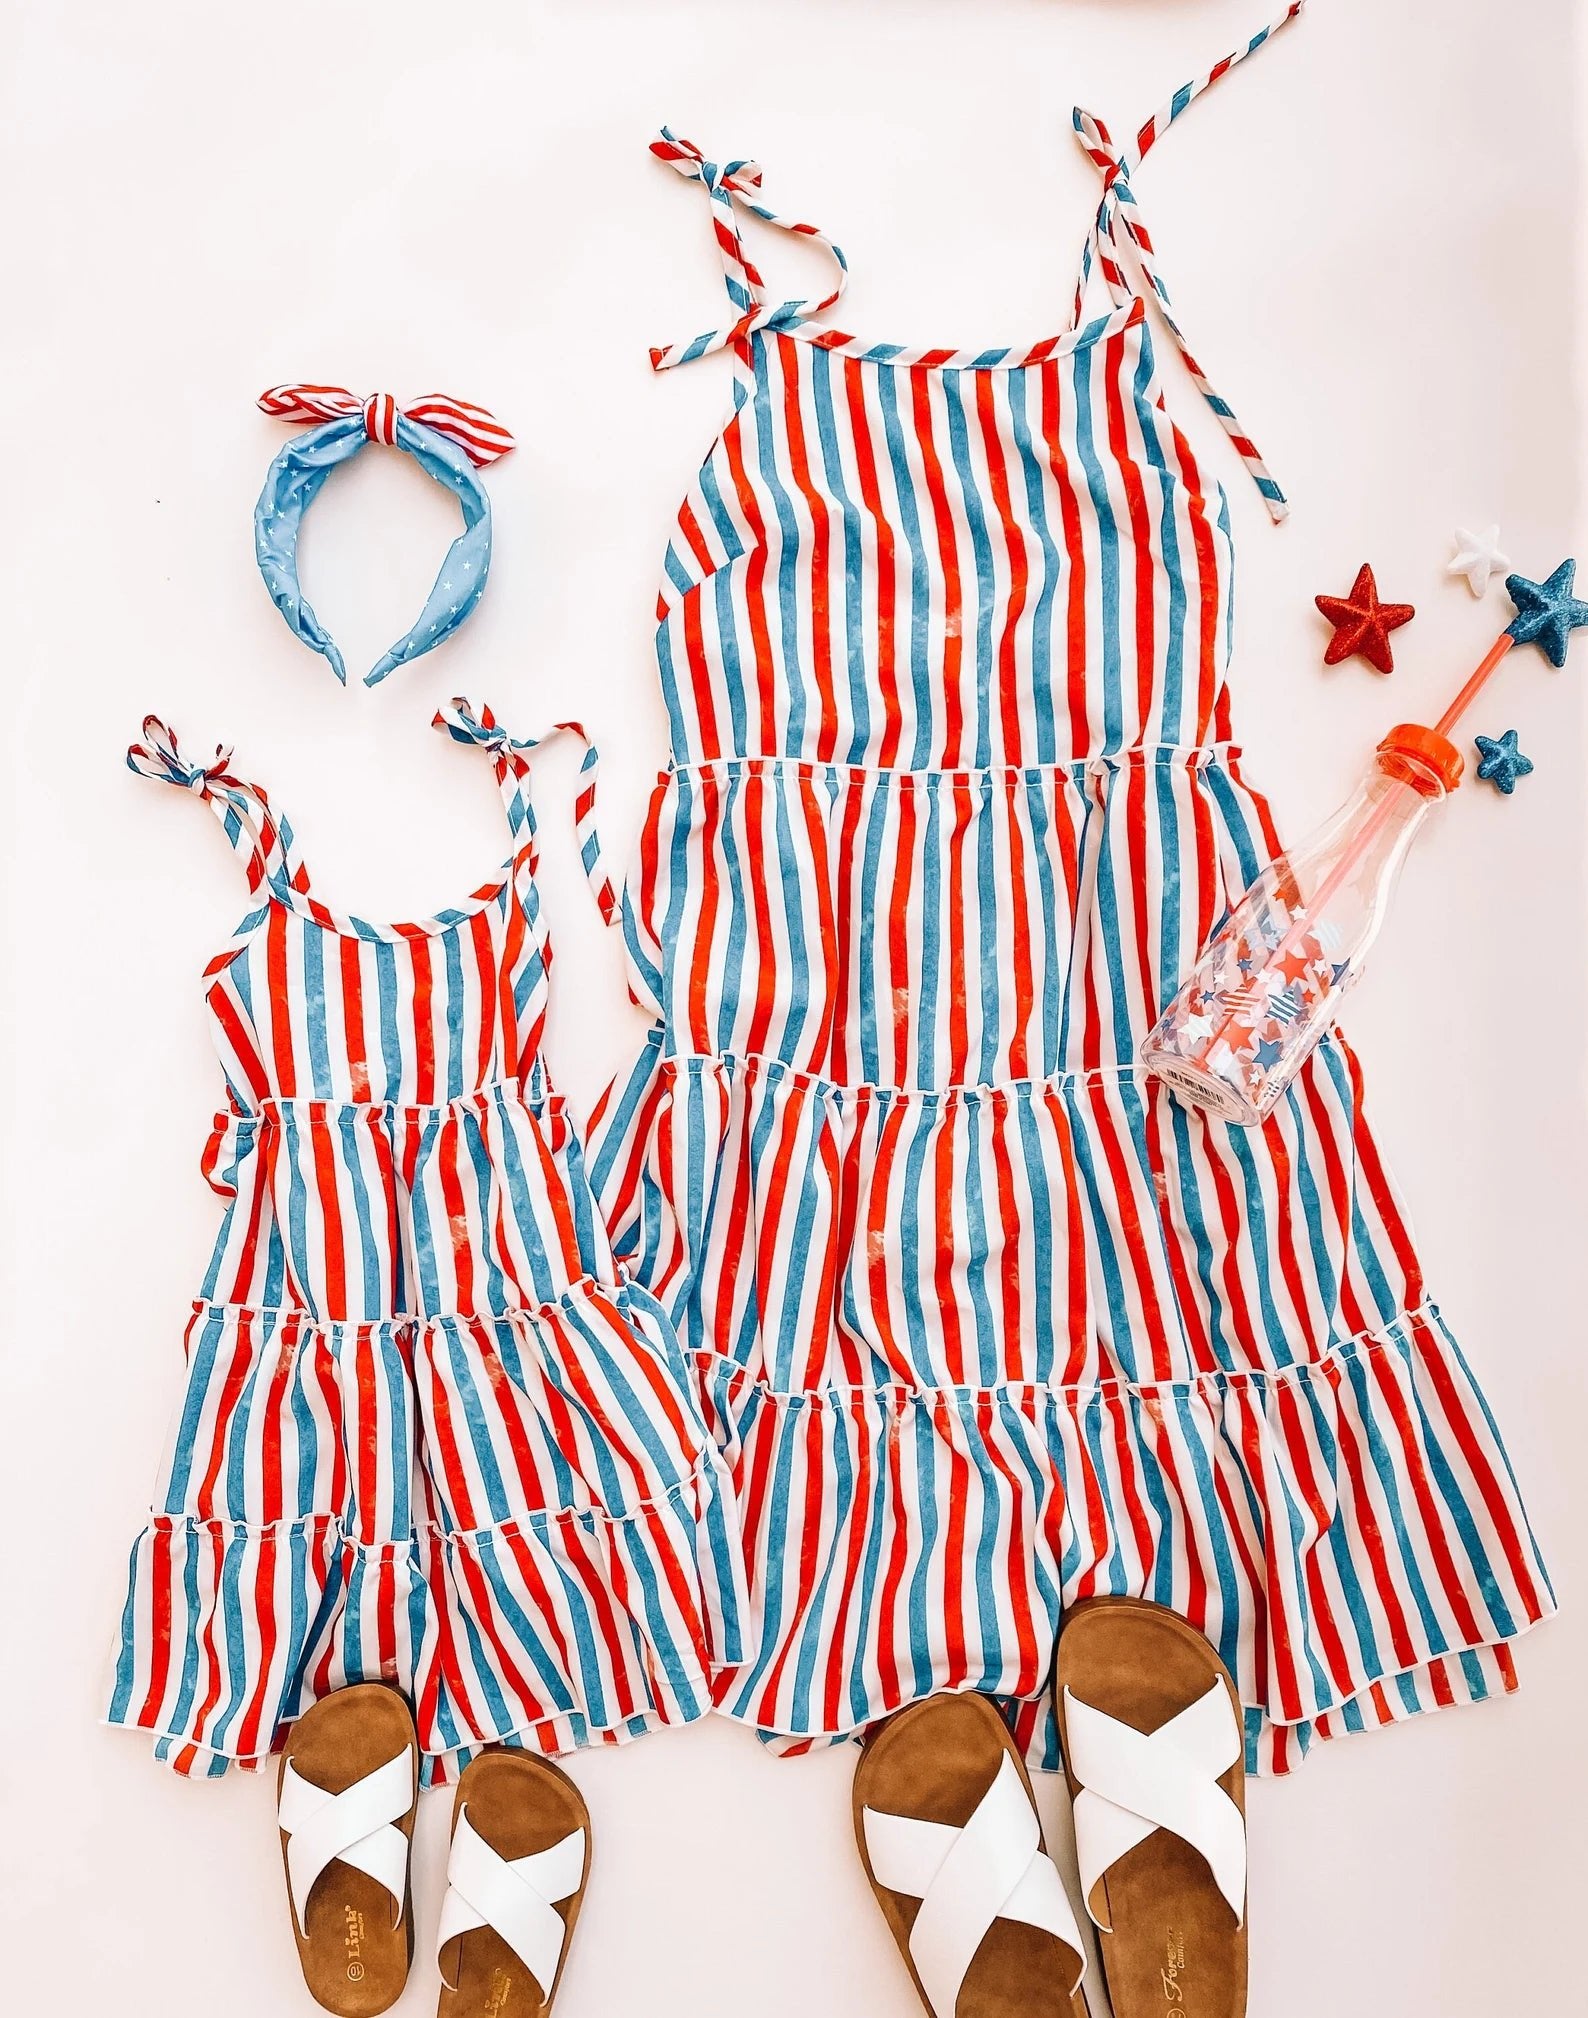 Festive 4th Mommy & Me Matching Dresses - LITTLE MIA BELLA